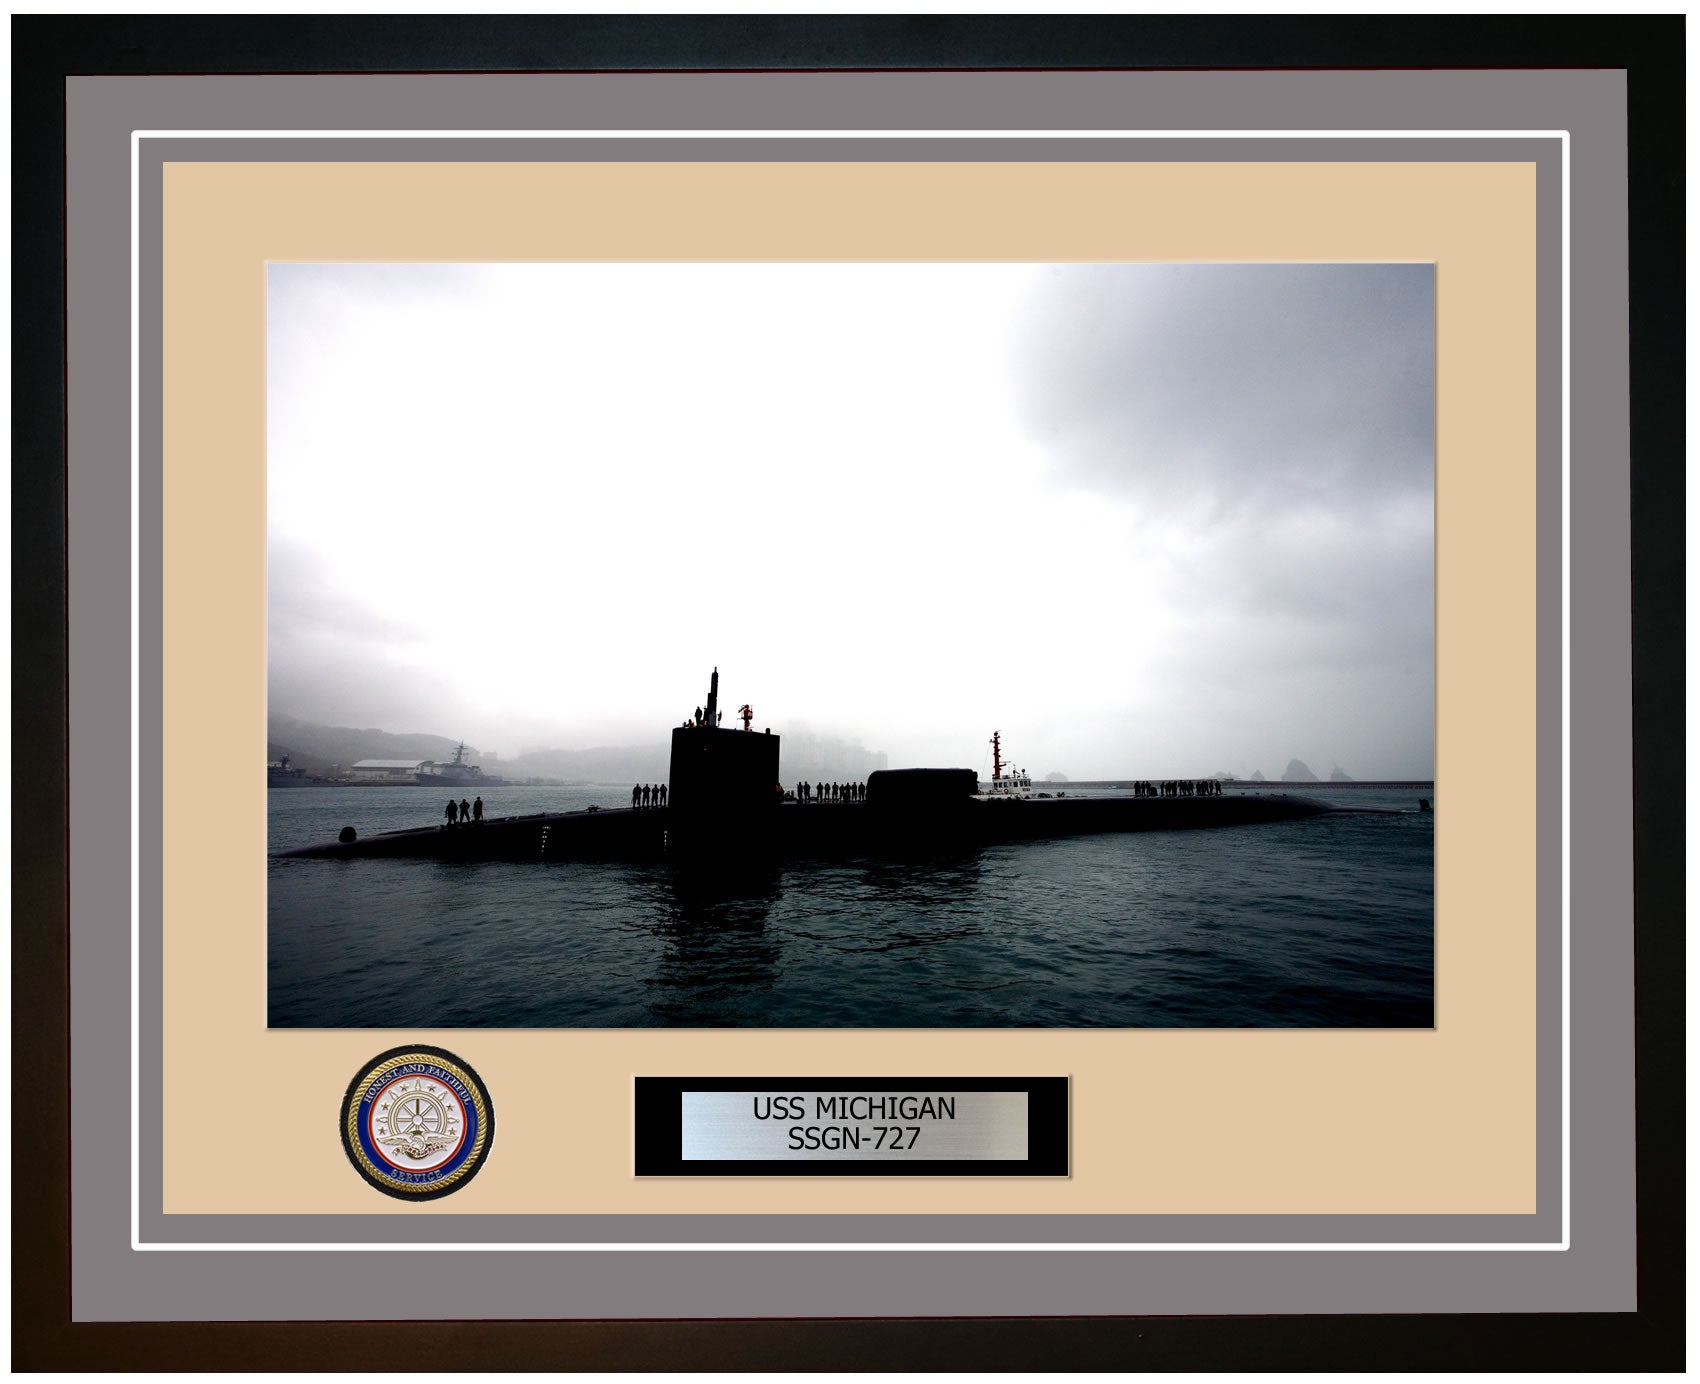 USS Michigan SSGN-727 Framed Navy Ship Photo Grey